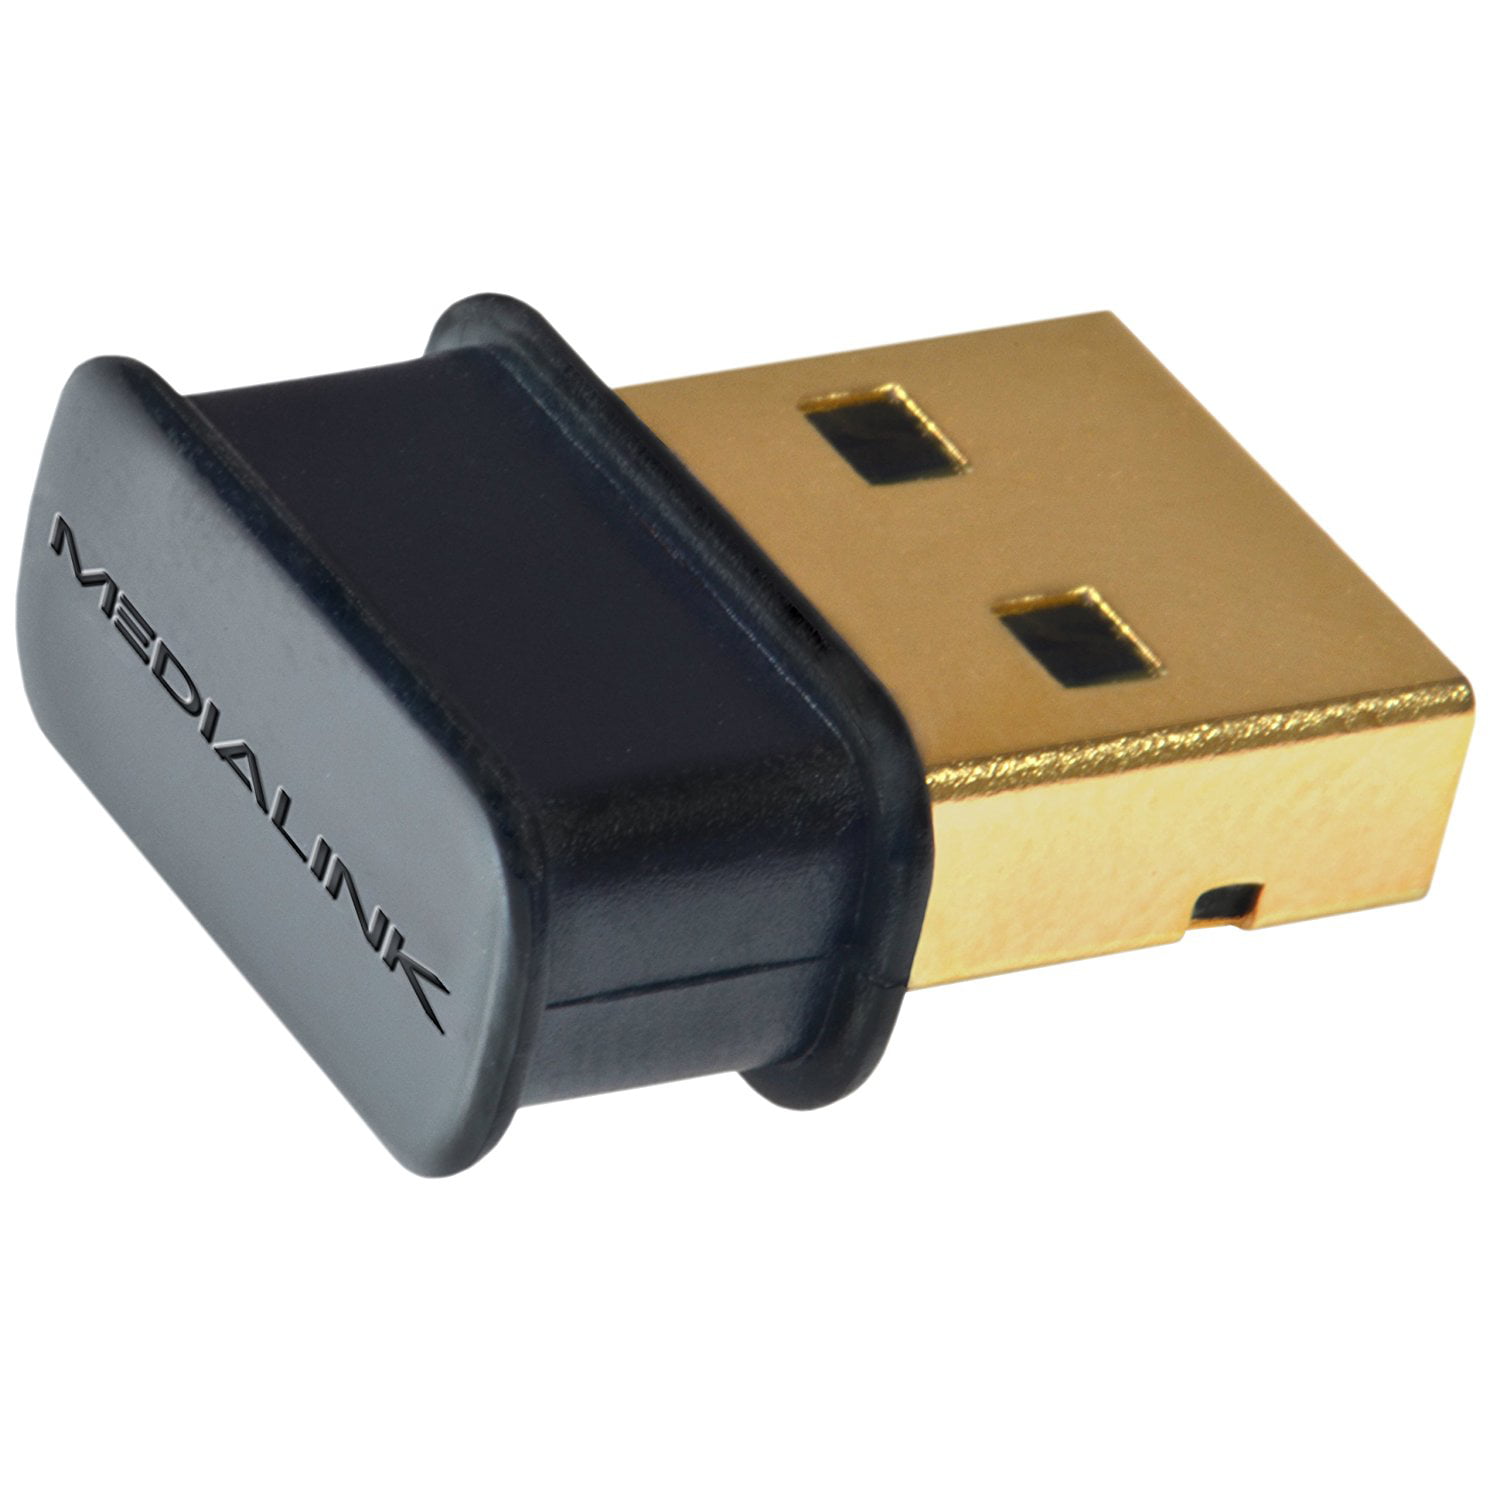 Bluetooth usb adapter драйвер. USB WIFI адаптер 2.4/5.0 Bluetooth 4.2. Адаптер Bluetooth-USB BT-590. Bluetooth USB адаптер Broadcom. USB Bluetooth 5 0 адаптер драйвер.